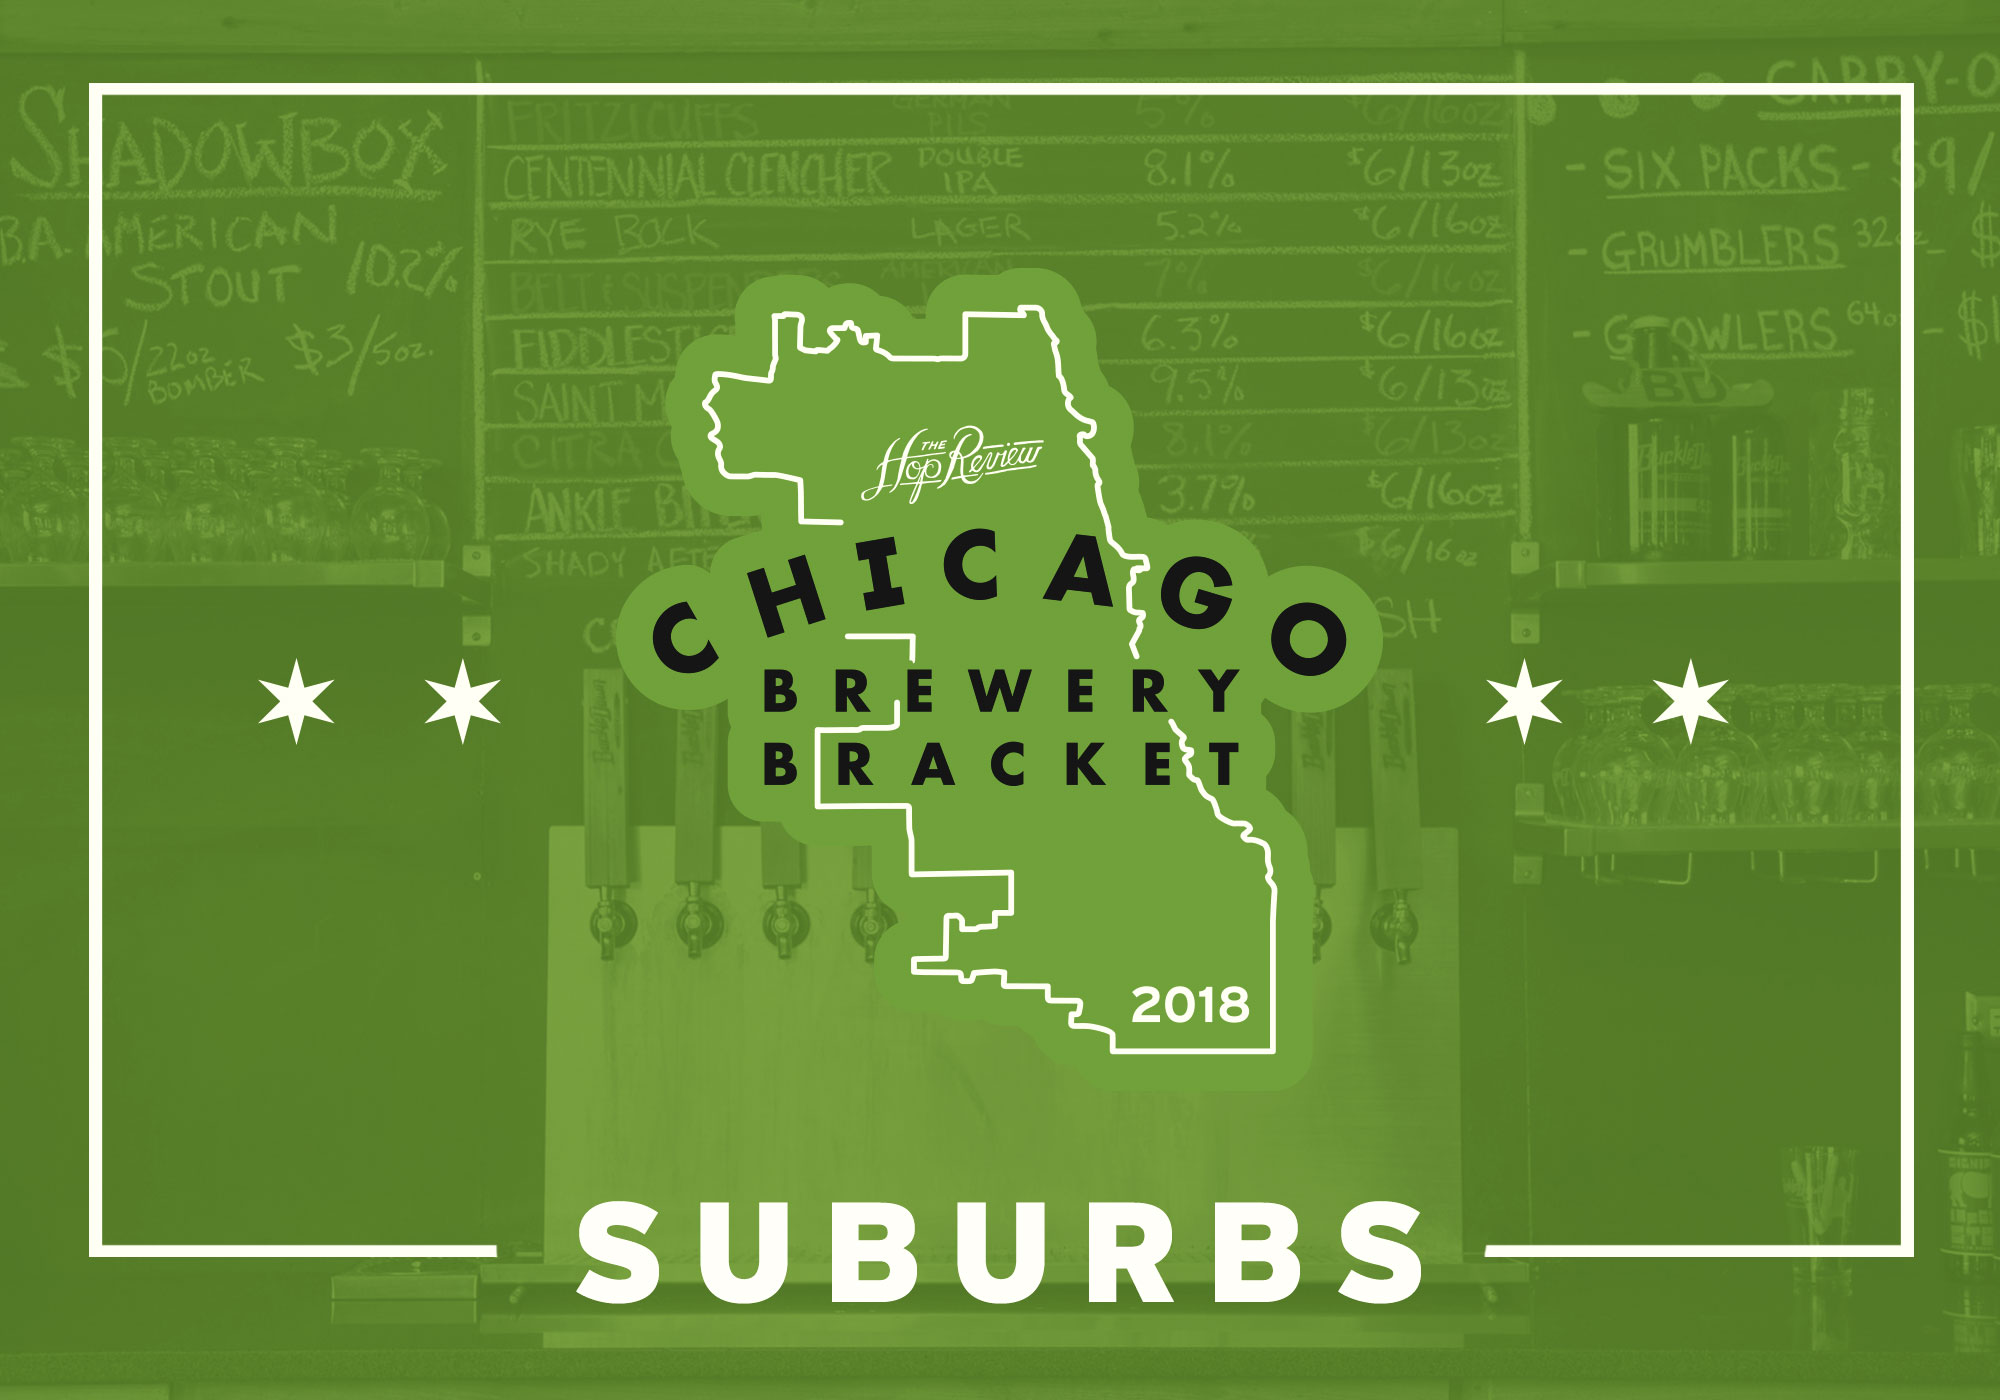 2018 Chicago Brewery Bracket: Suburbs – Rd. 1